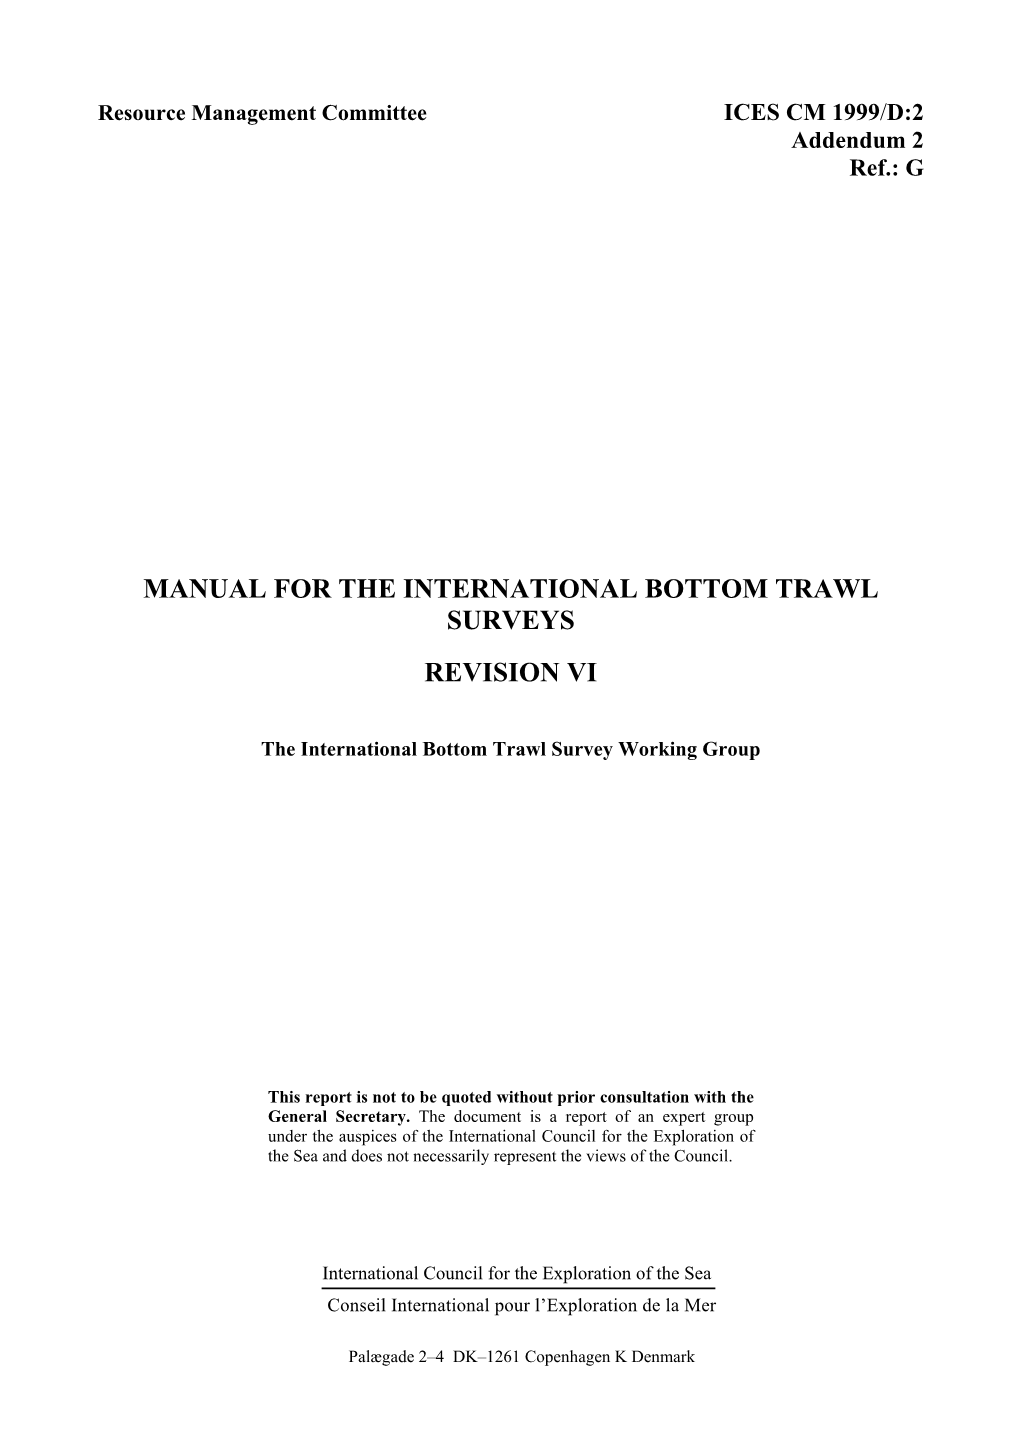 Manual for the International Bottom Trawl Surveys. Revision VI